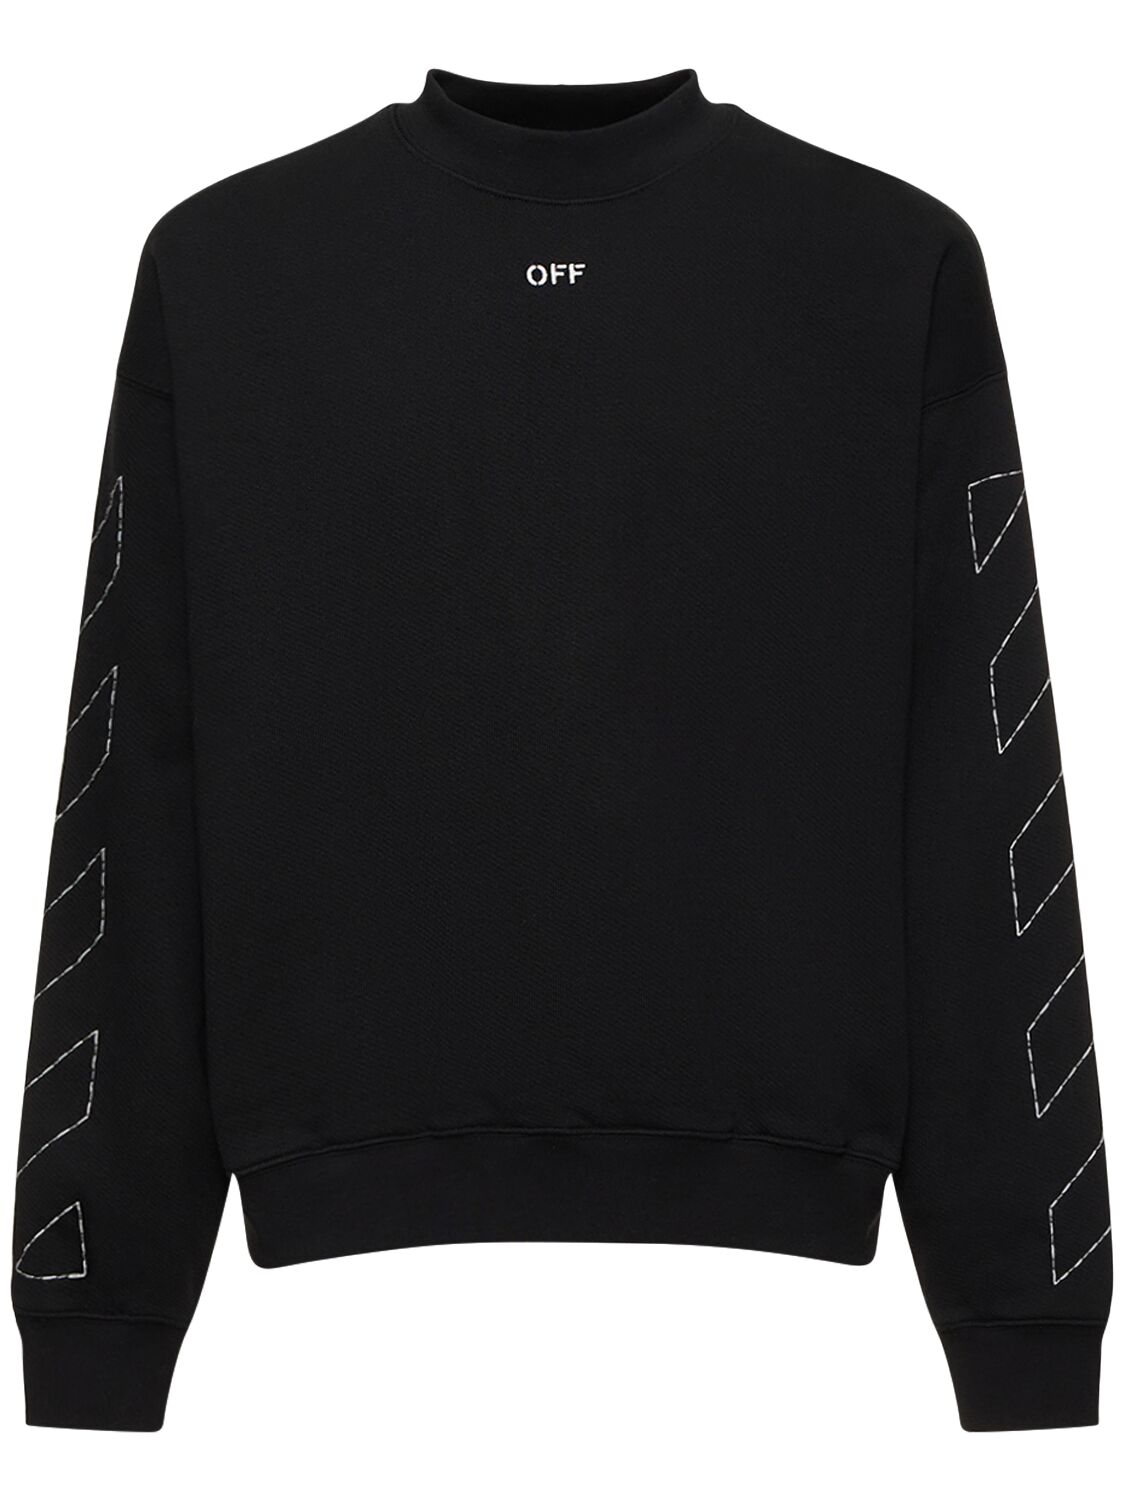 Image of Off Stitch Skate Cotton Sweatshirt